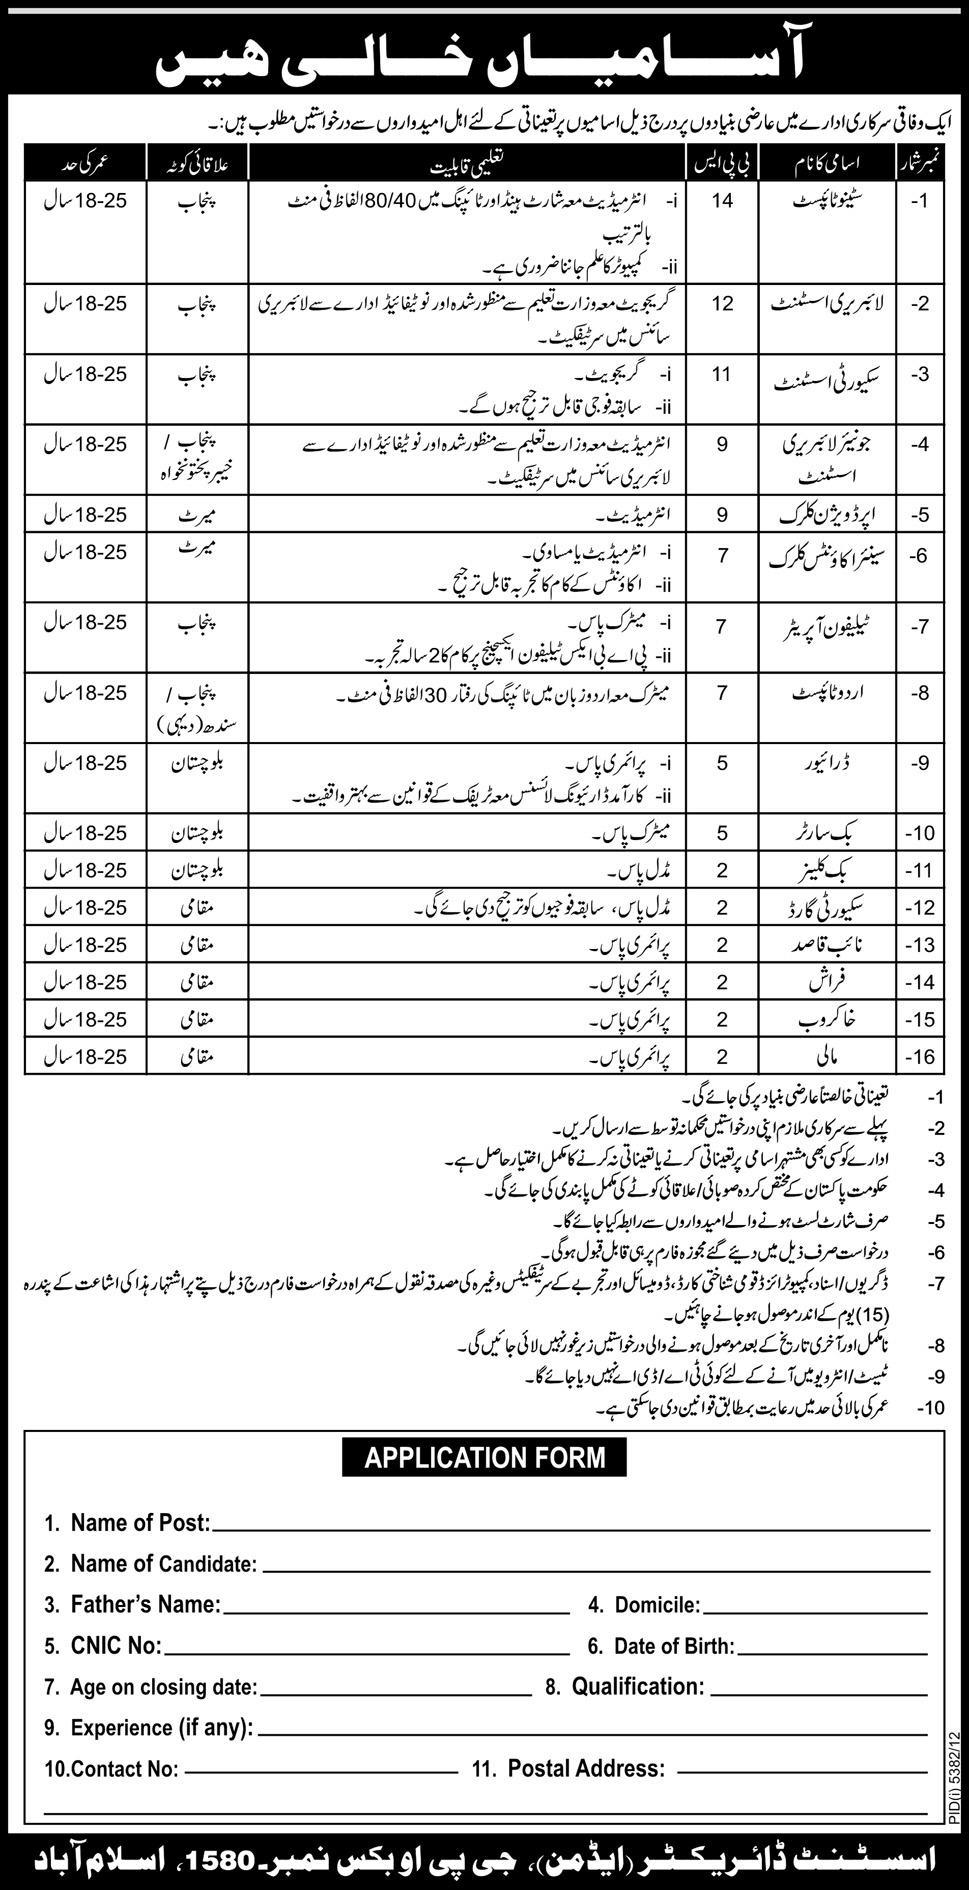 PO Box 1580 Islamabad Jobs 2013 Application Form